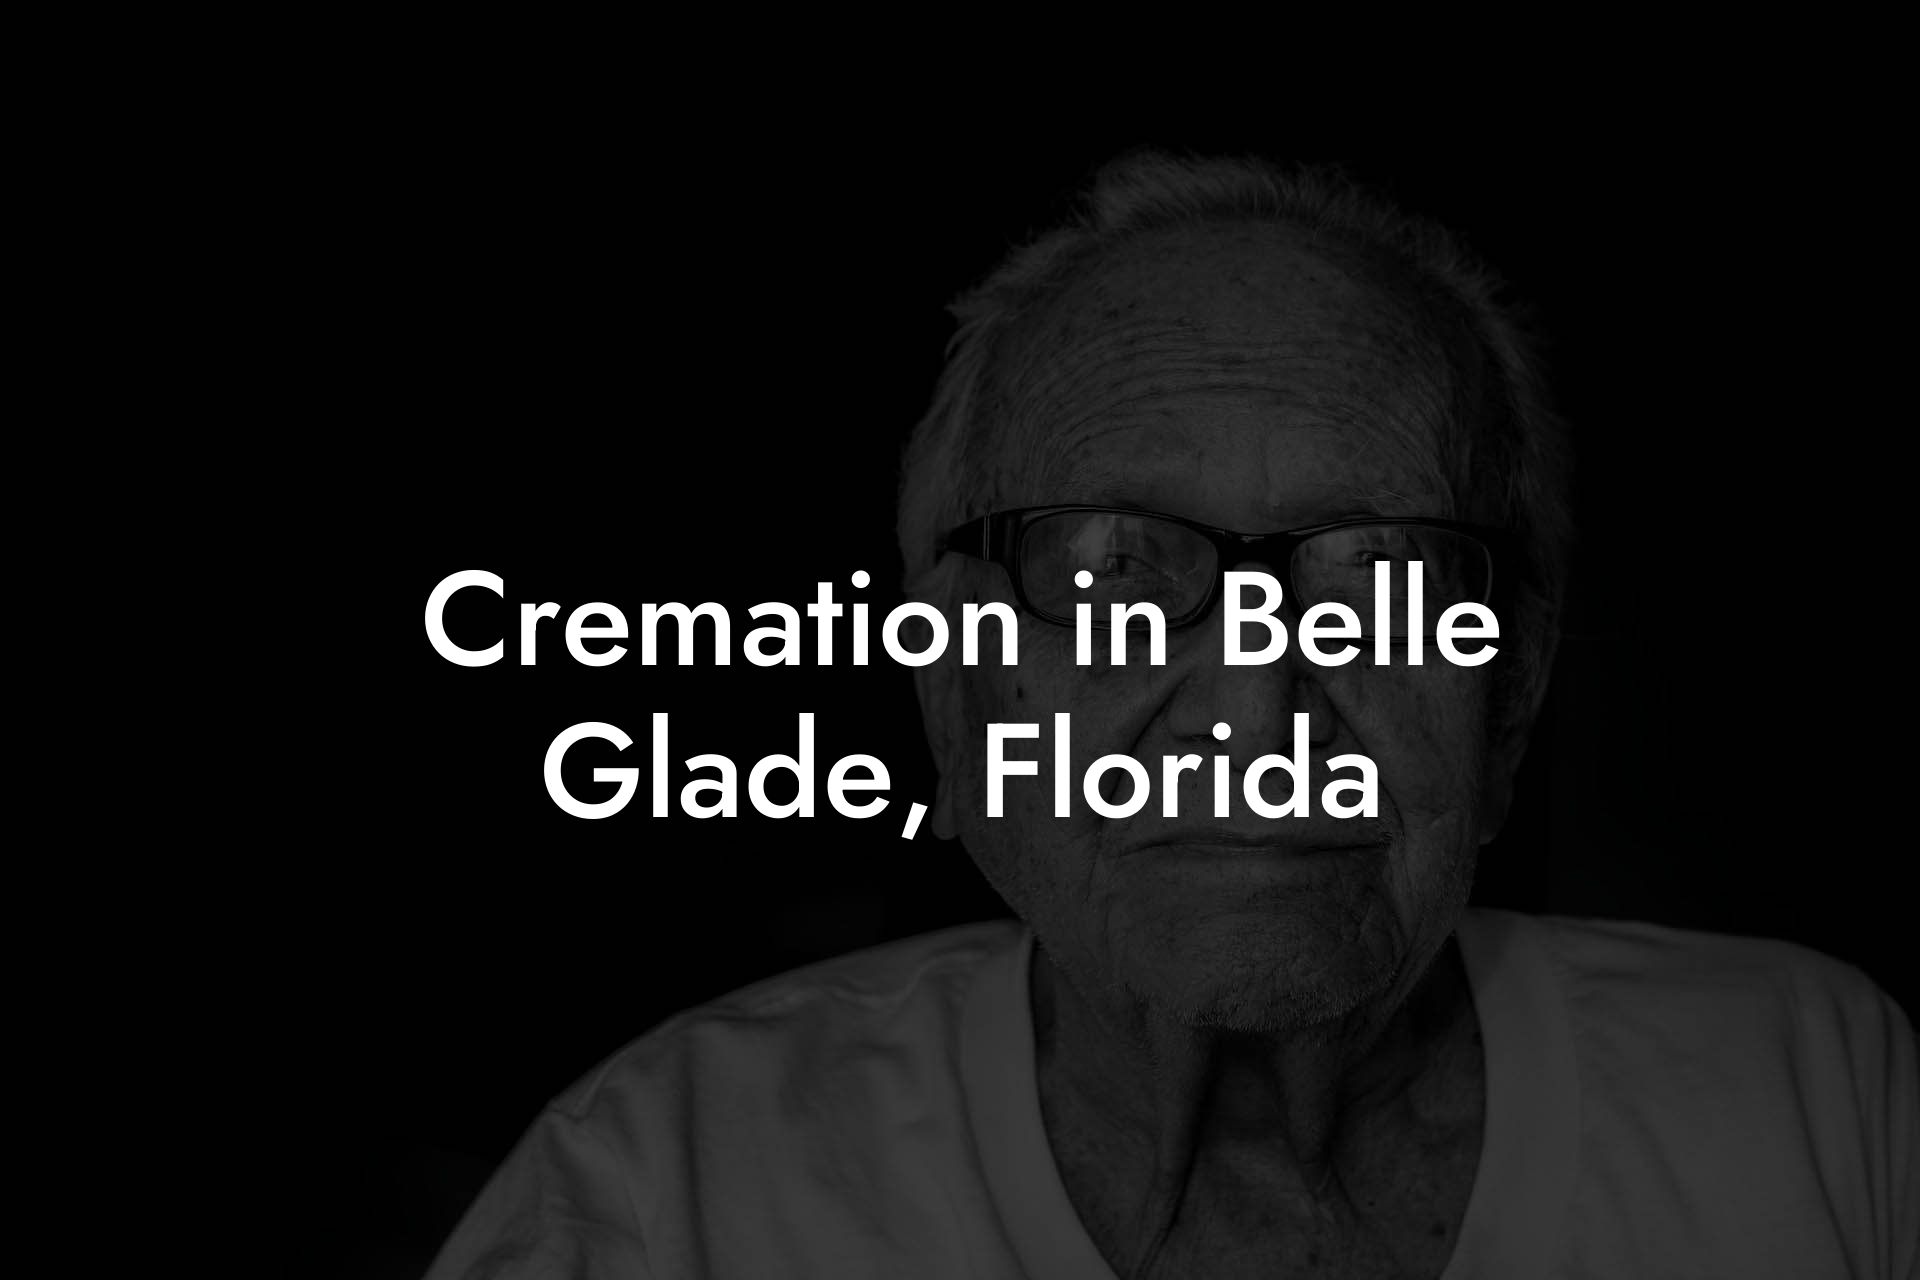 Cremation in Belle Glade, Florida